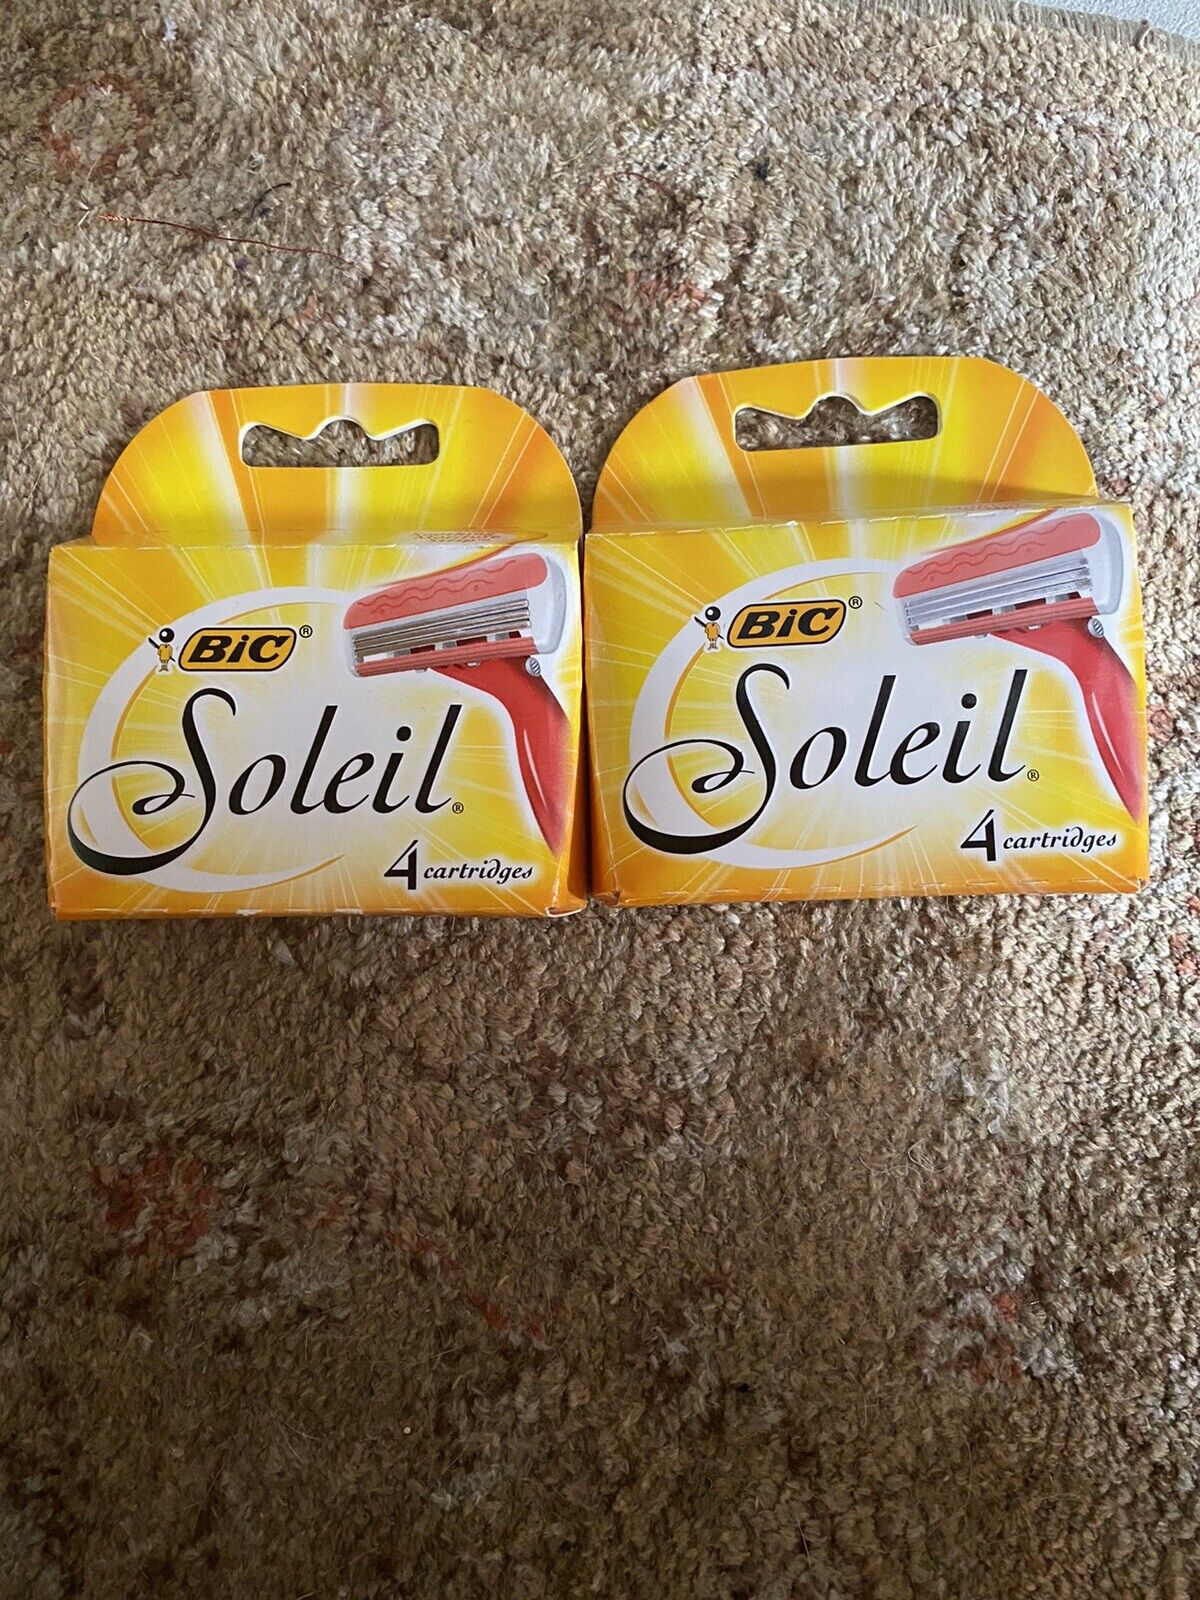 BIC Soleil Razor Cartridges Philadelphia Mall Shaver Sale special price Refills Cartridg Boxes 2 of 4